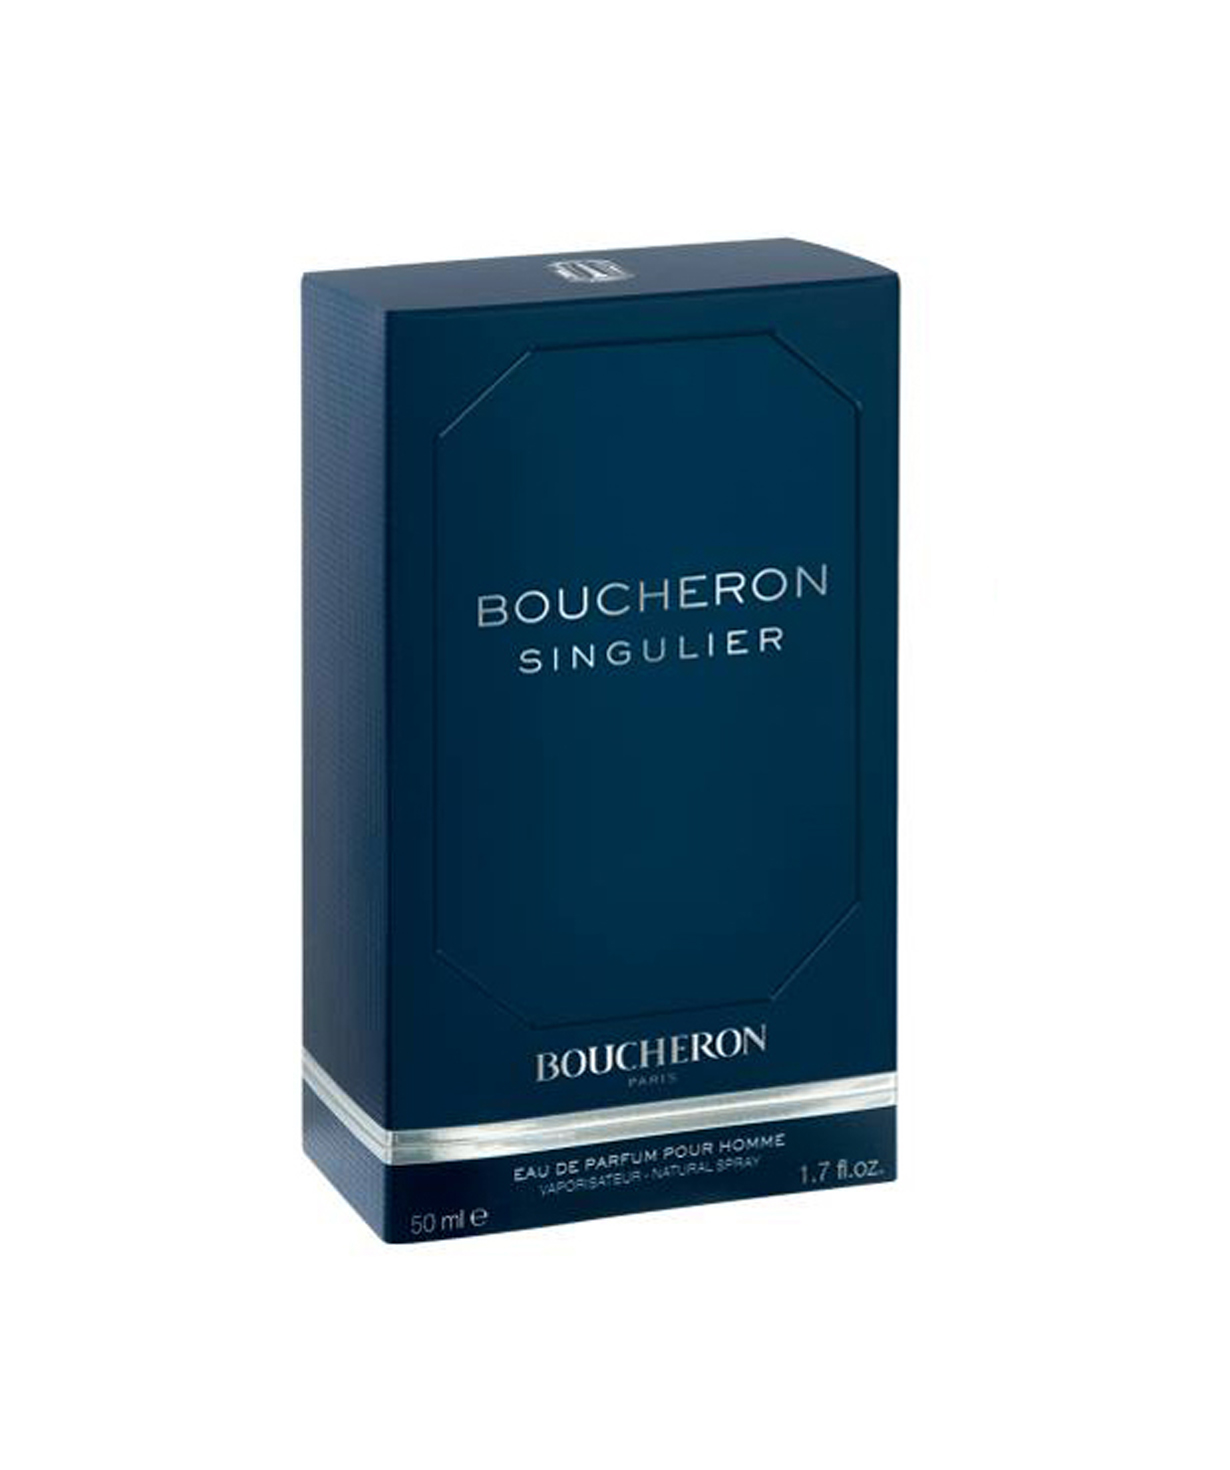 Perfume «Boucheron» Singulier, for men, 50 ml